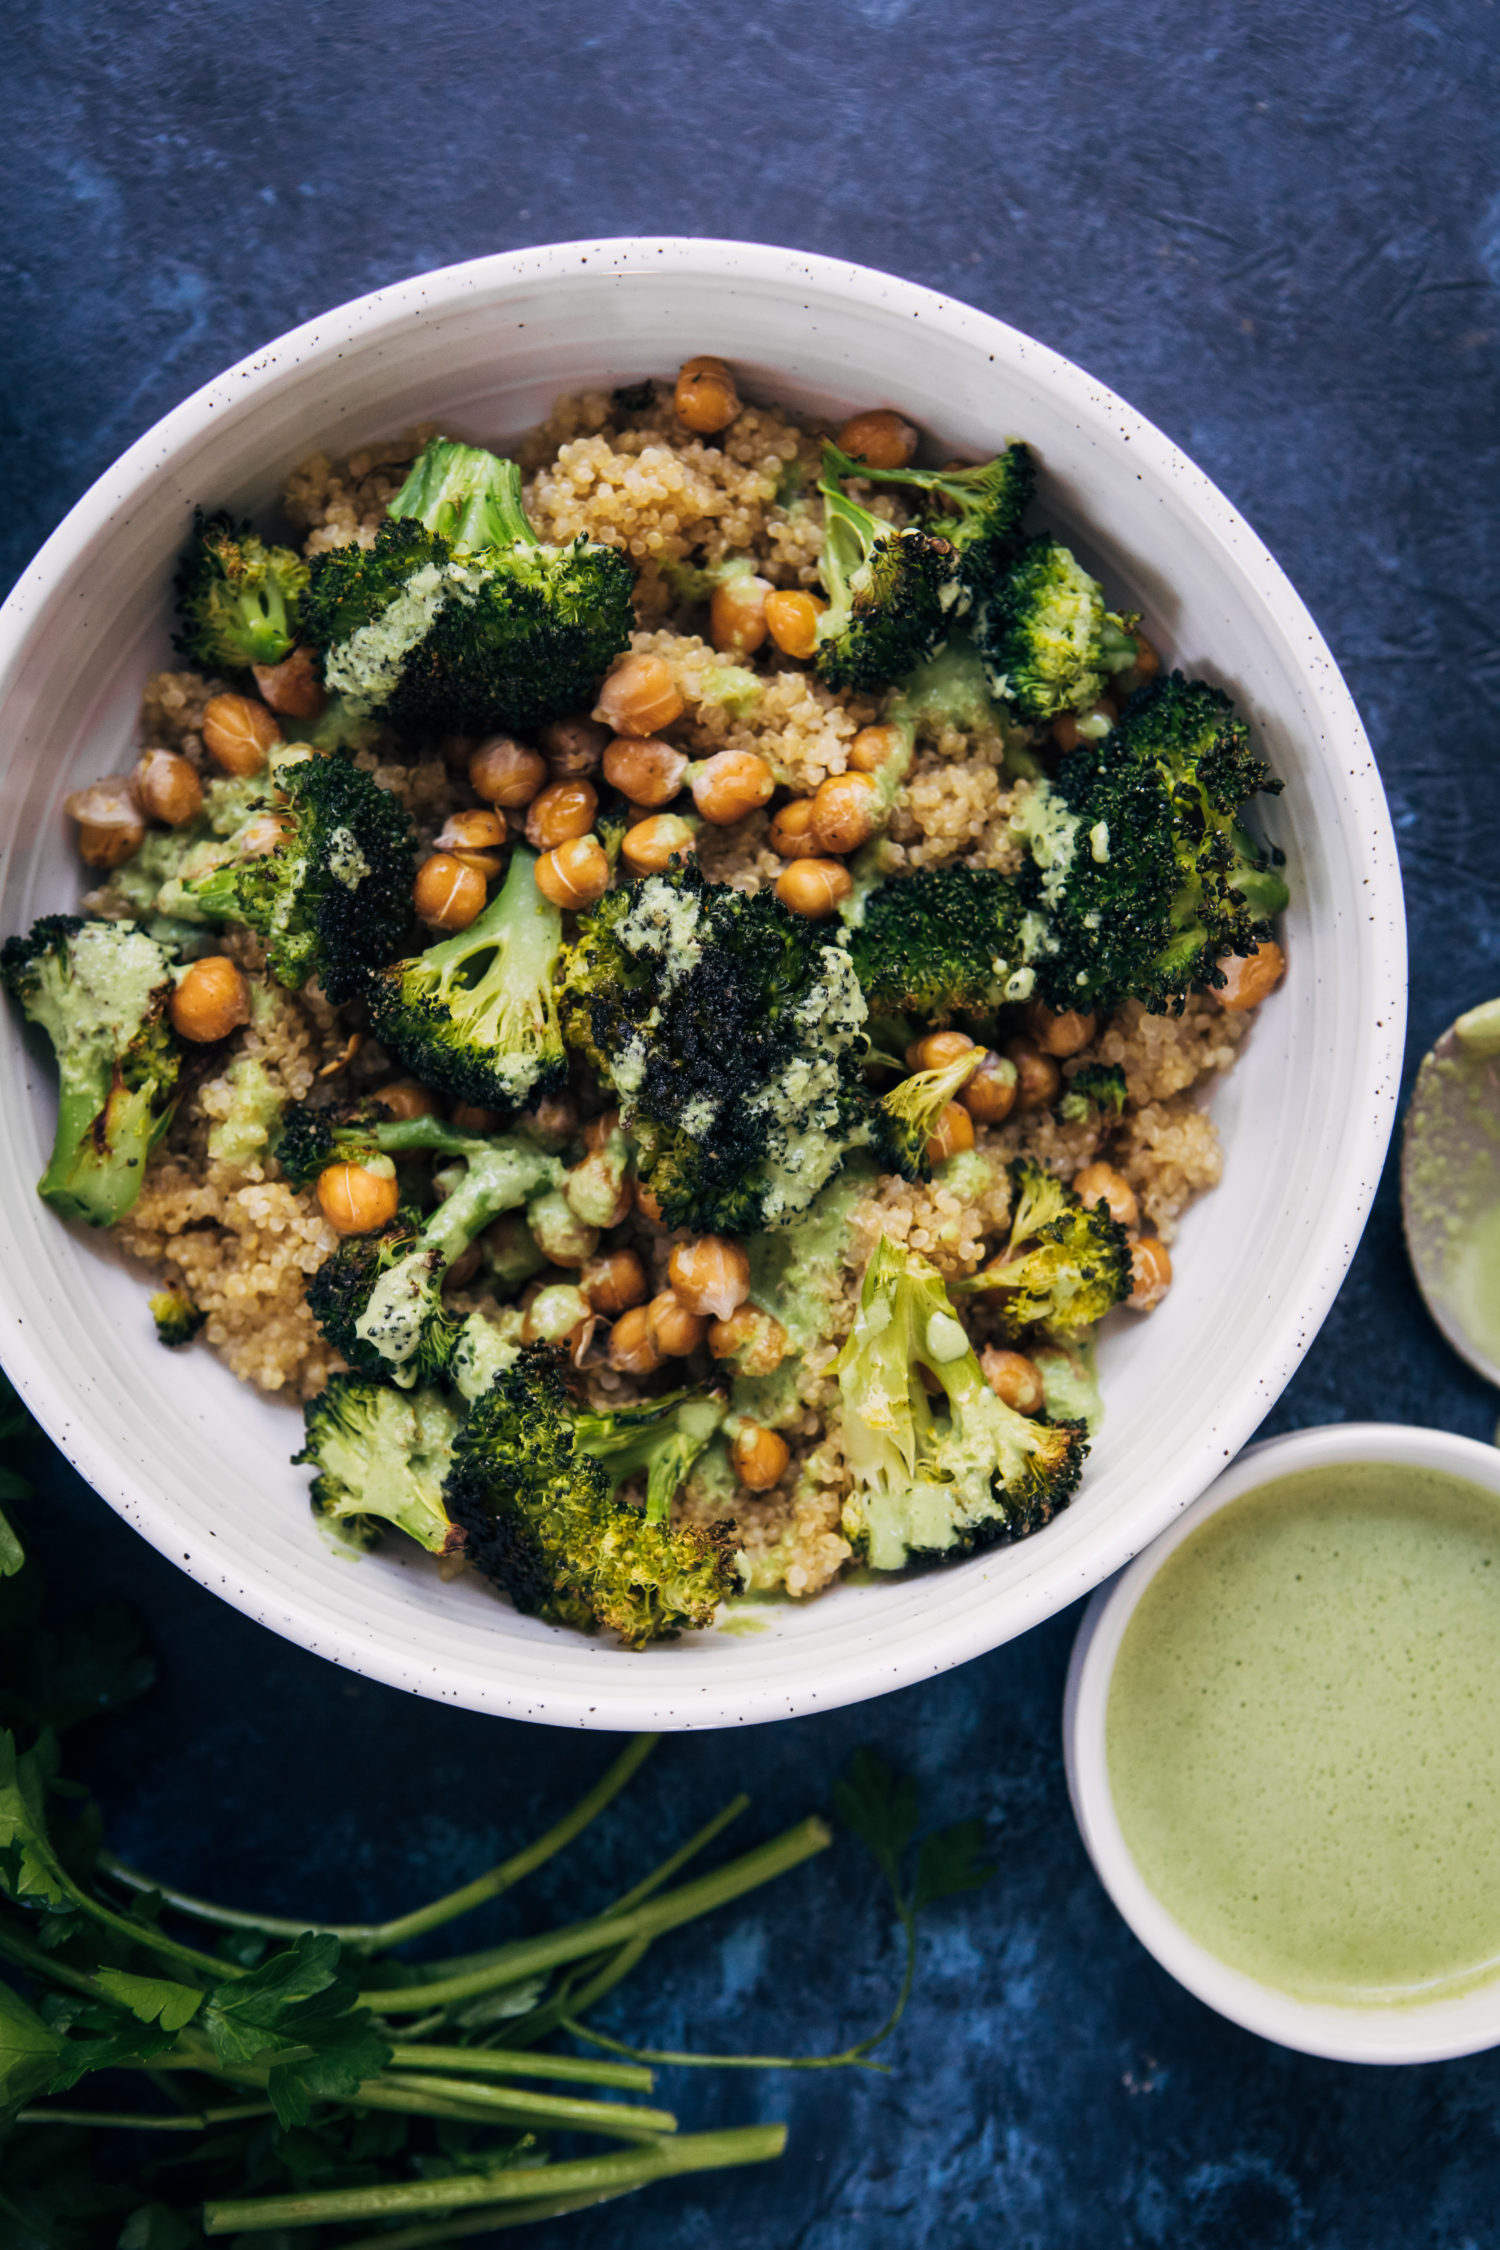 The Vegan Power Bowl | Well and Full | #healthy #vegan #recipe